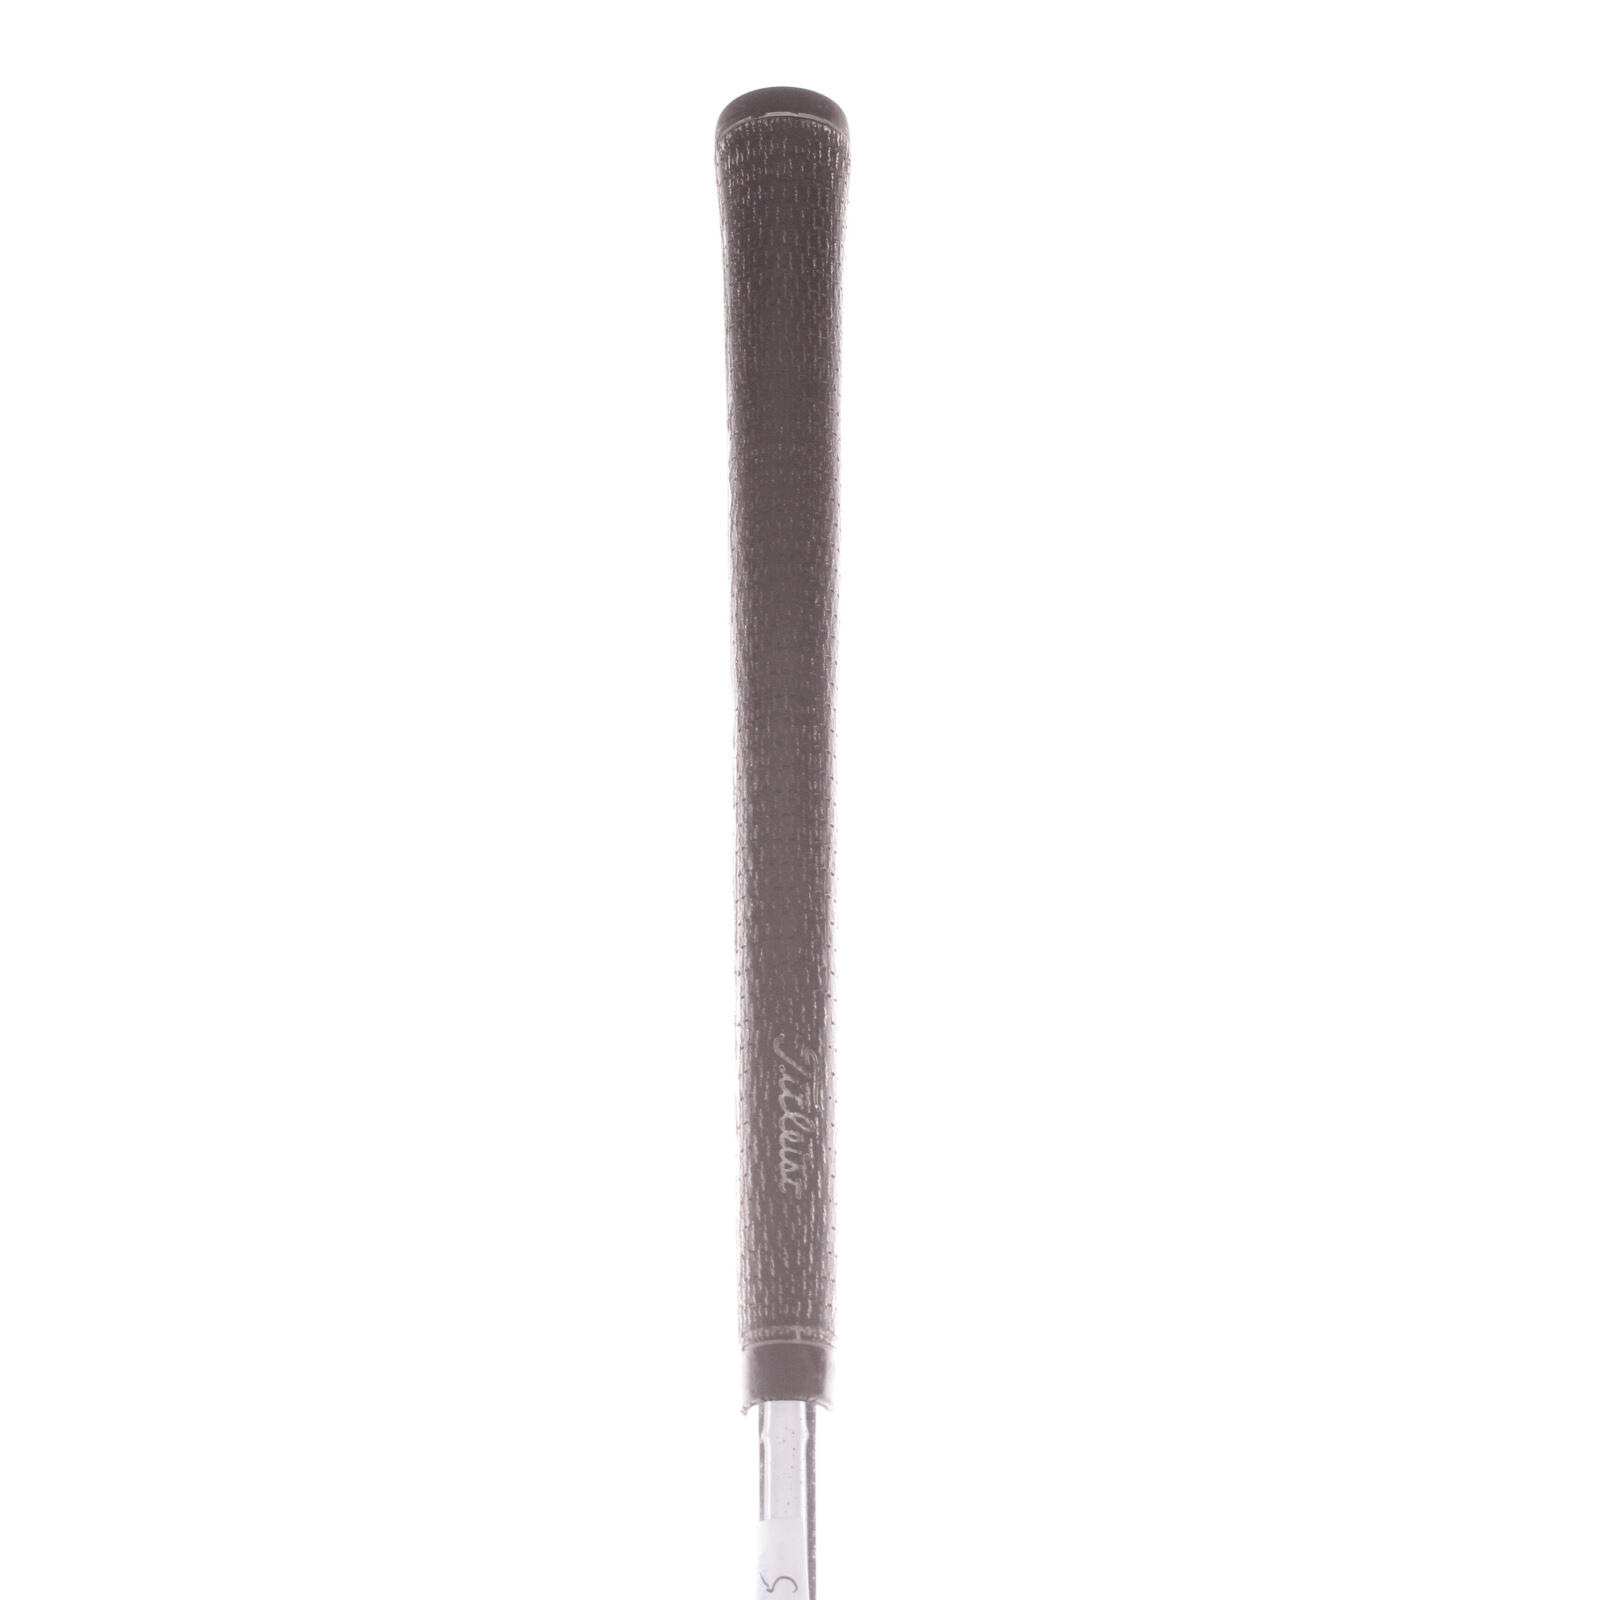 USED - 6-Iron Titleist 775 CB Steel Shaft Regular Flex Right Handed - GRADE C 5/5